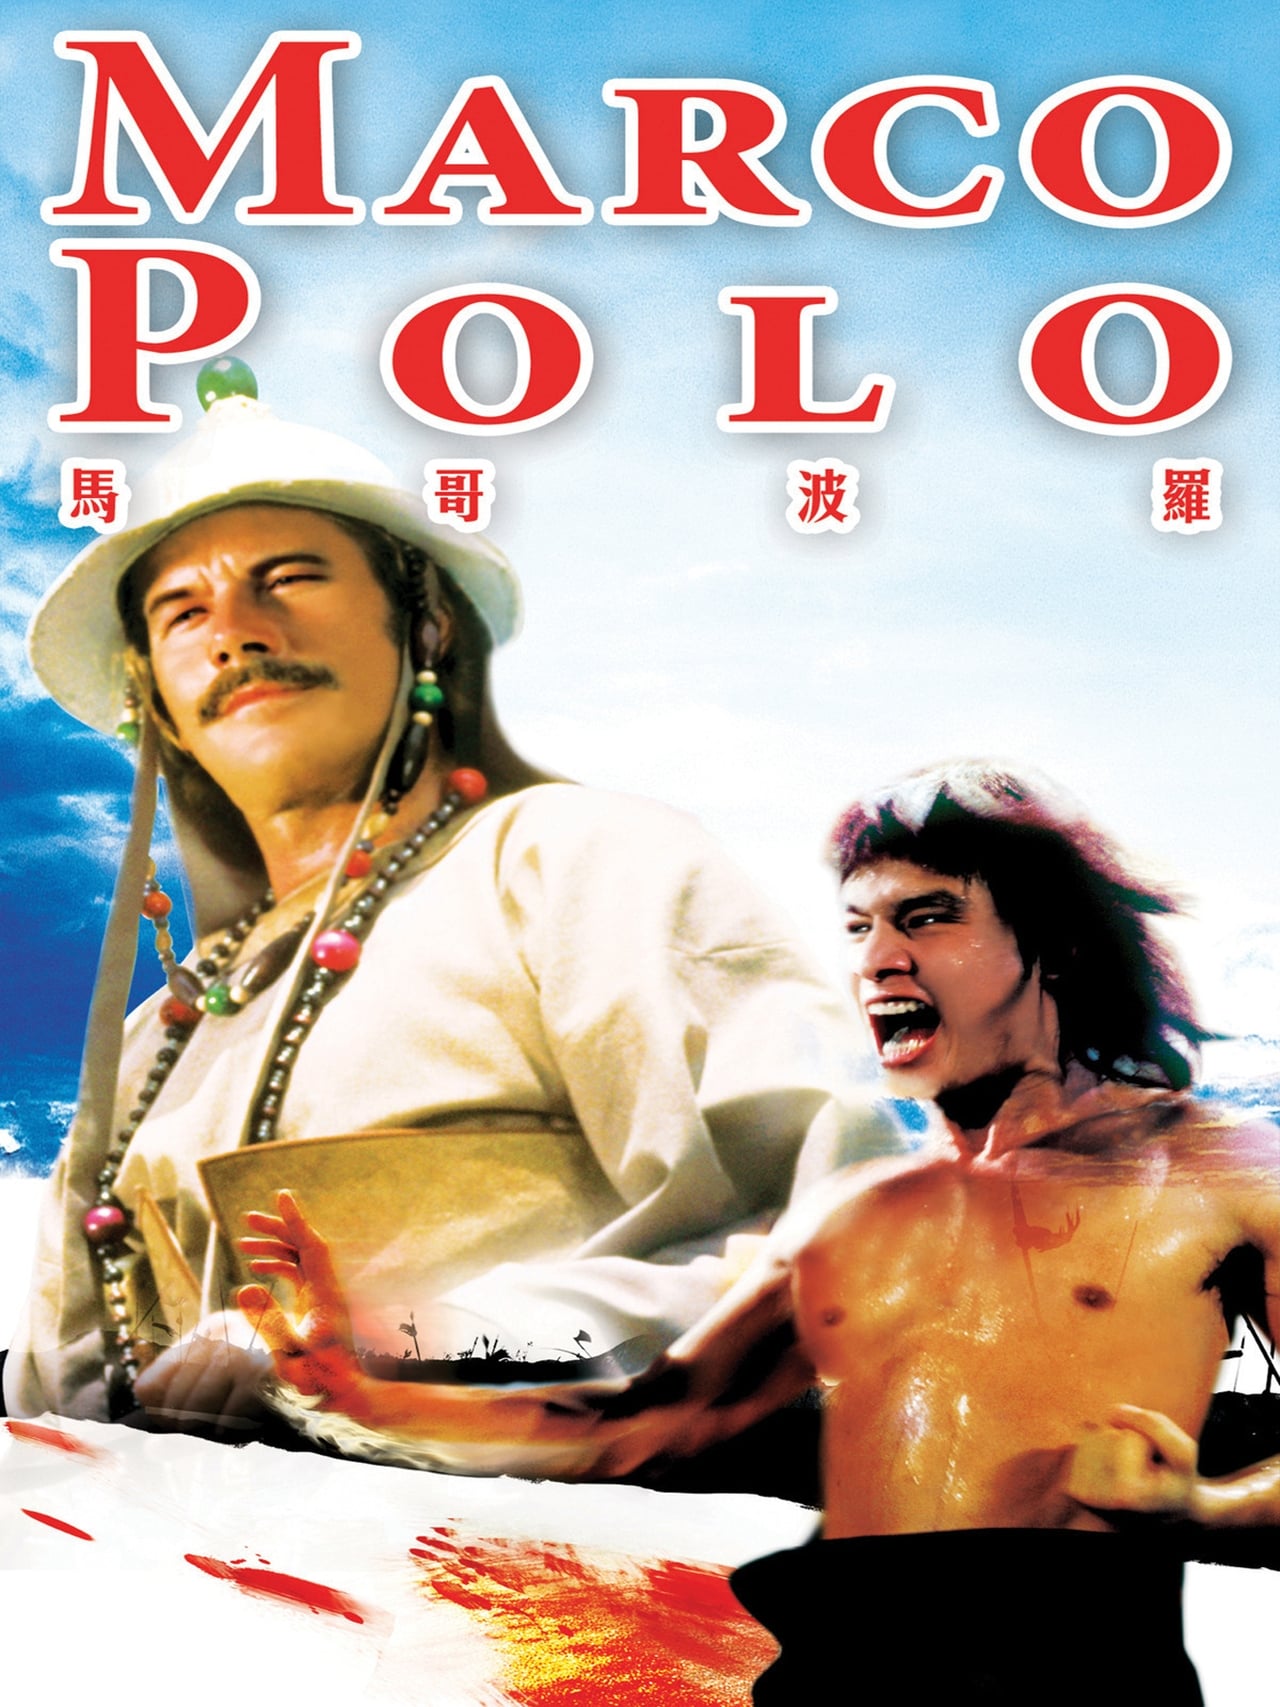 EN - Marco Polo, The Four Assassins  (1975)